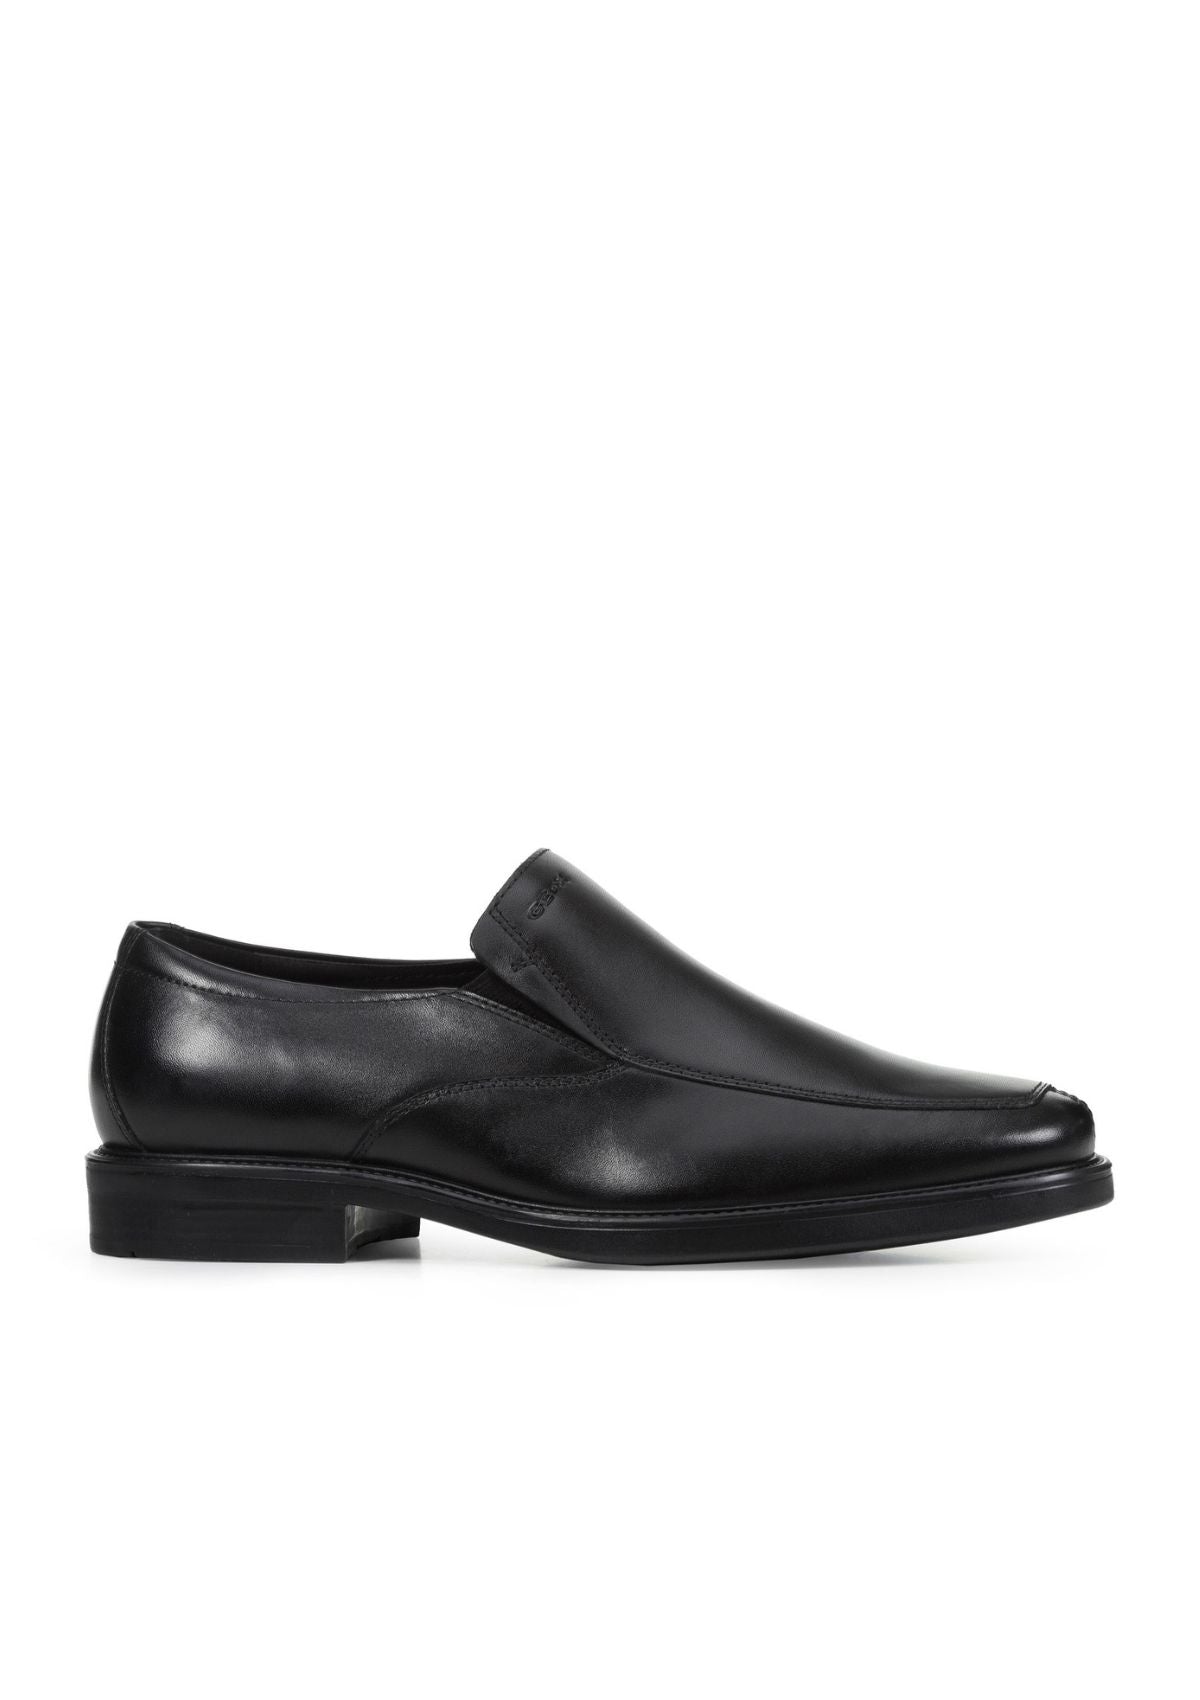 Geox Men Shoes BRANDOFF Slip-On Black side